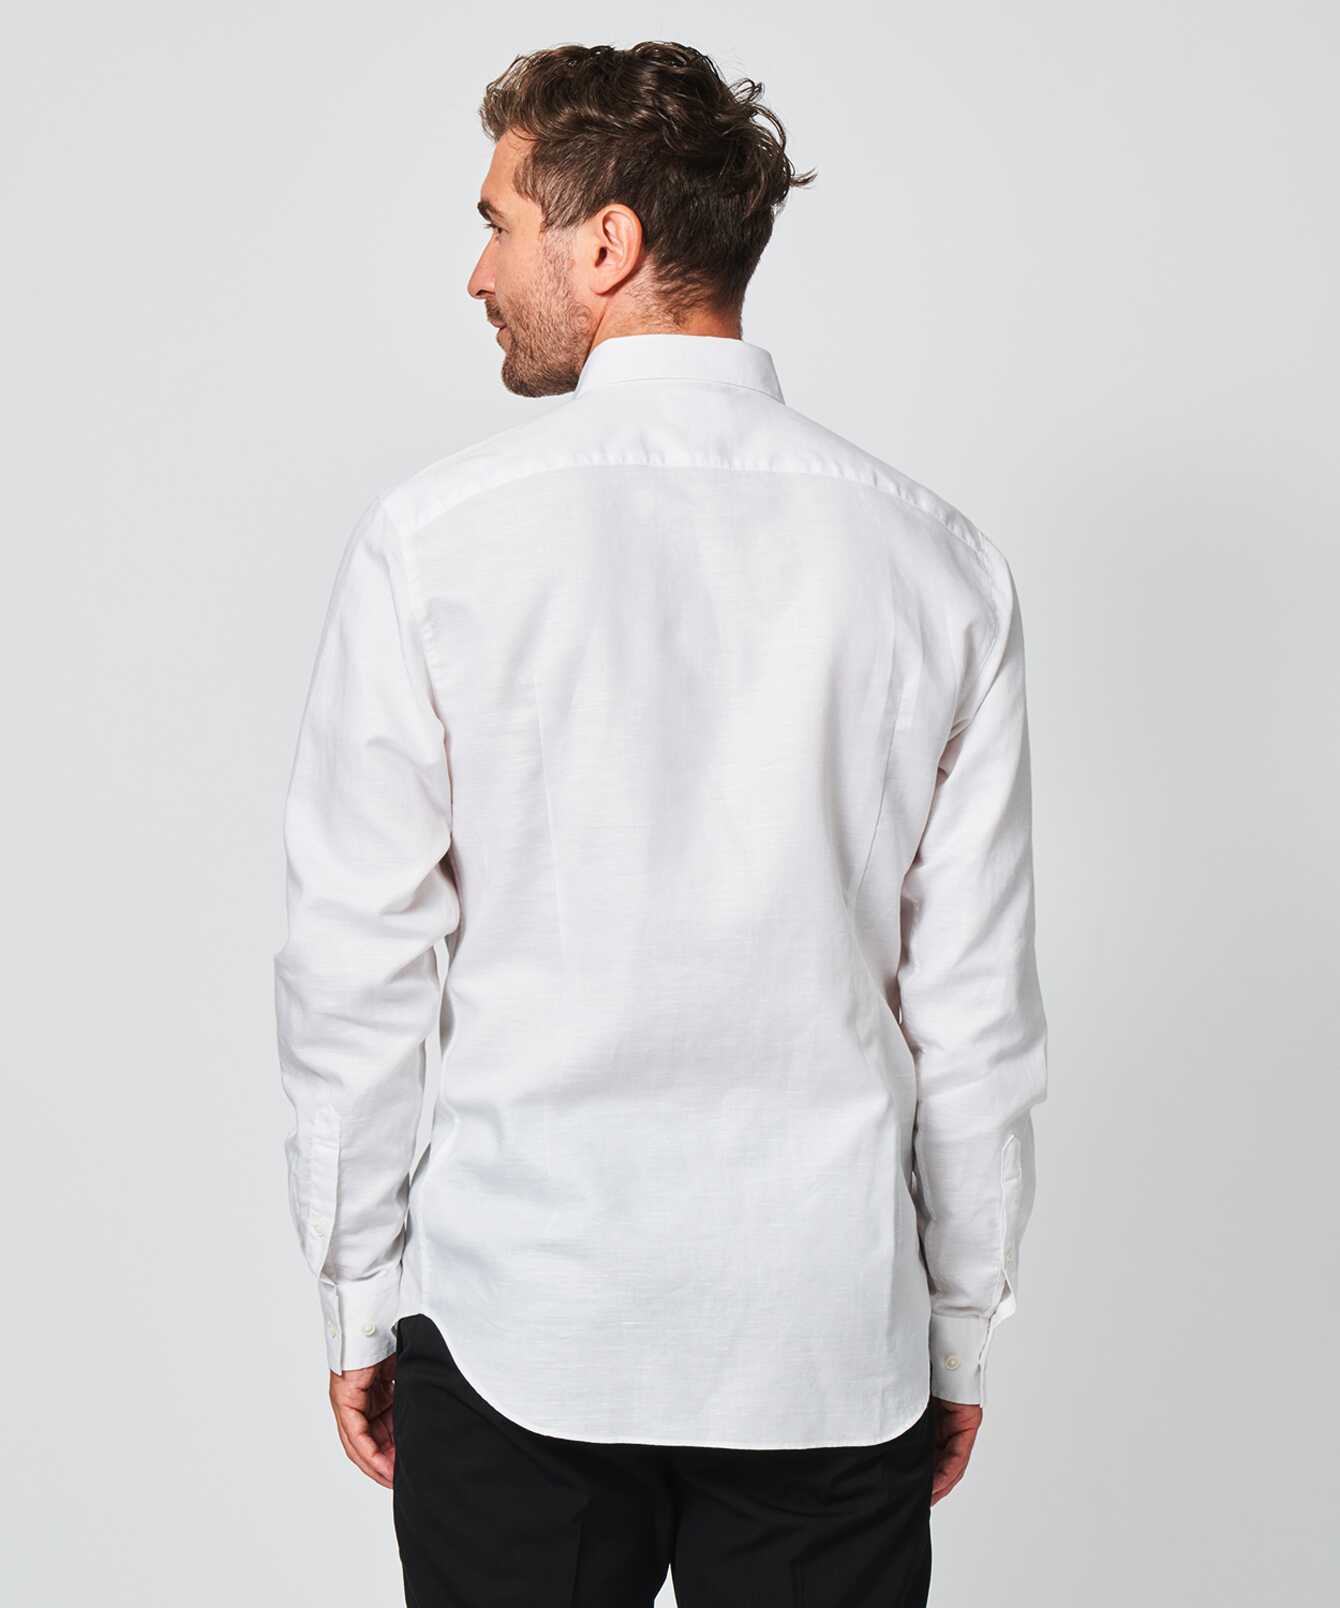 Shirt Portofino White Linen Shirt Extra Long Sleeve The Shirt Factory